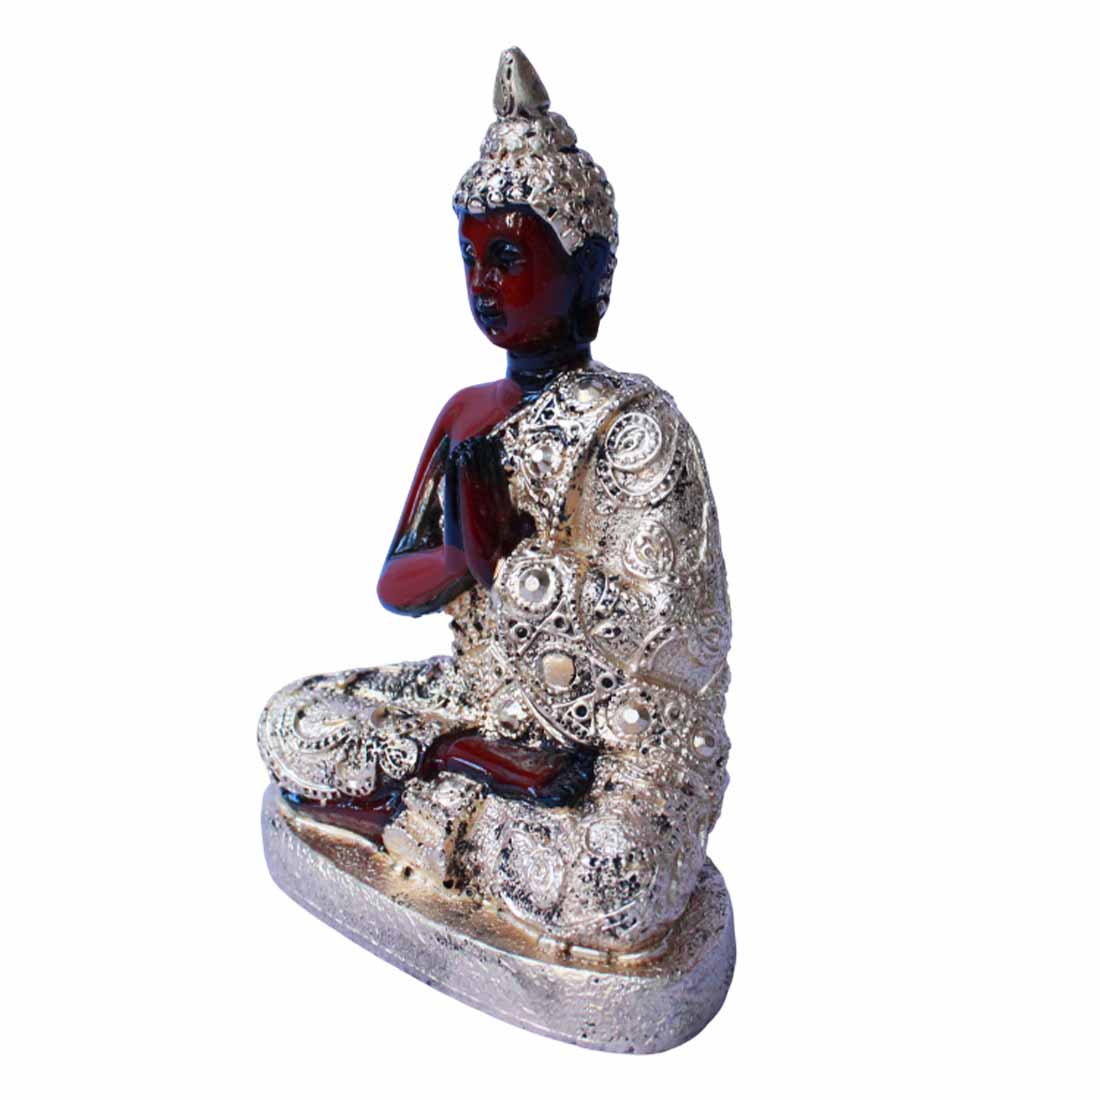 Meditating Buddha Statue - for Peace and Harmony - 7 Inch - ApkaMart